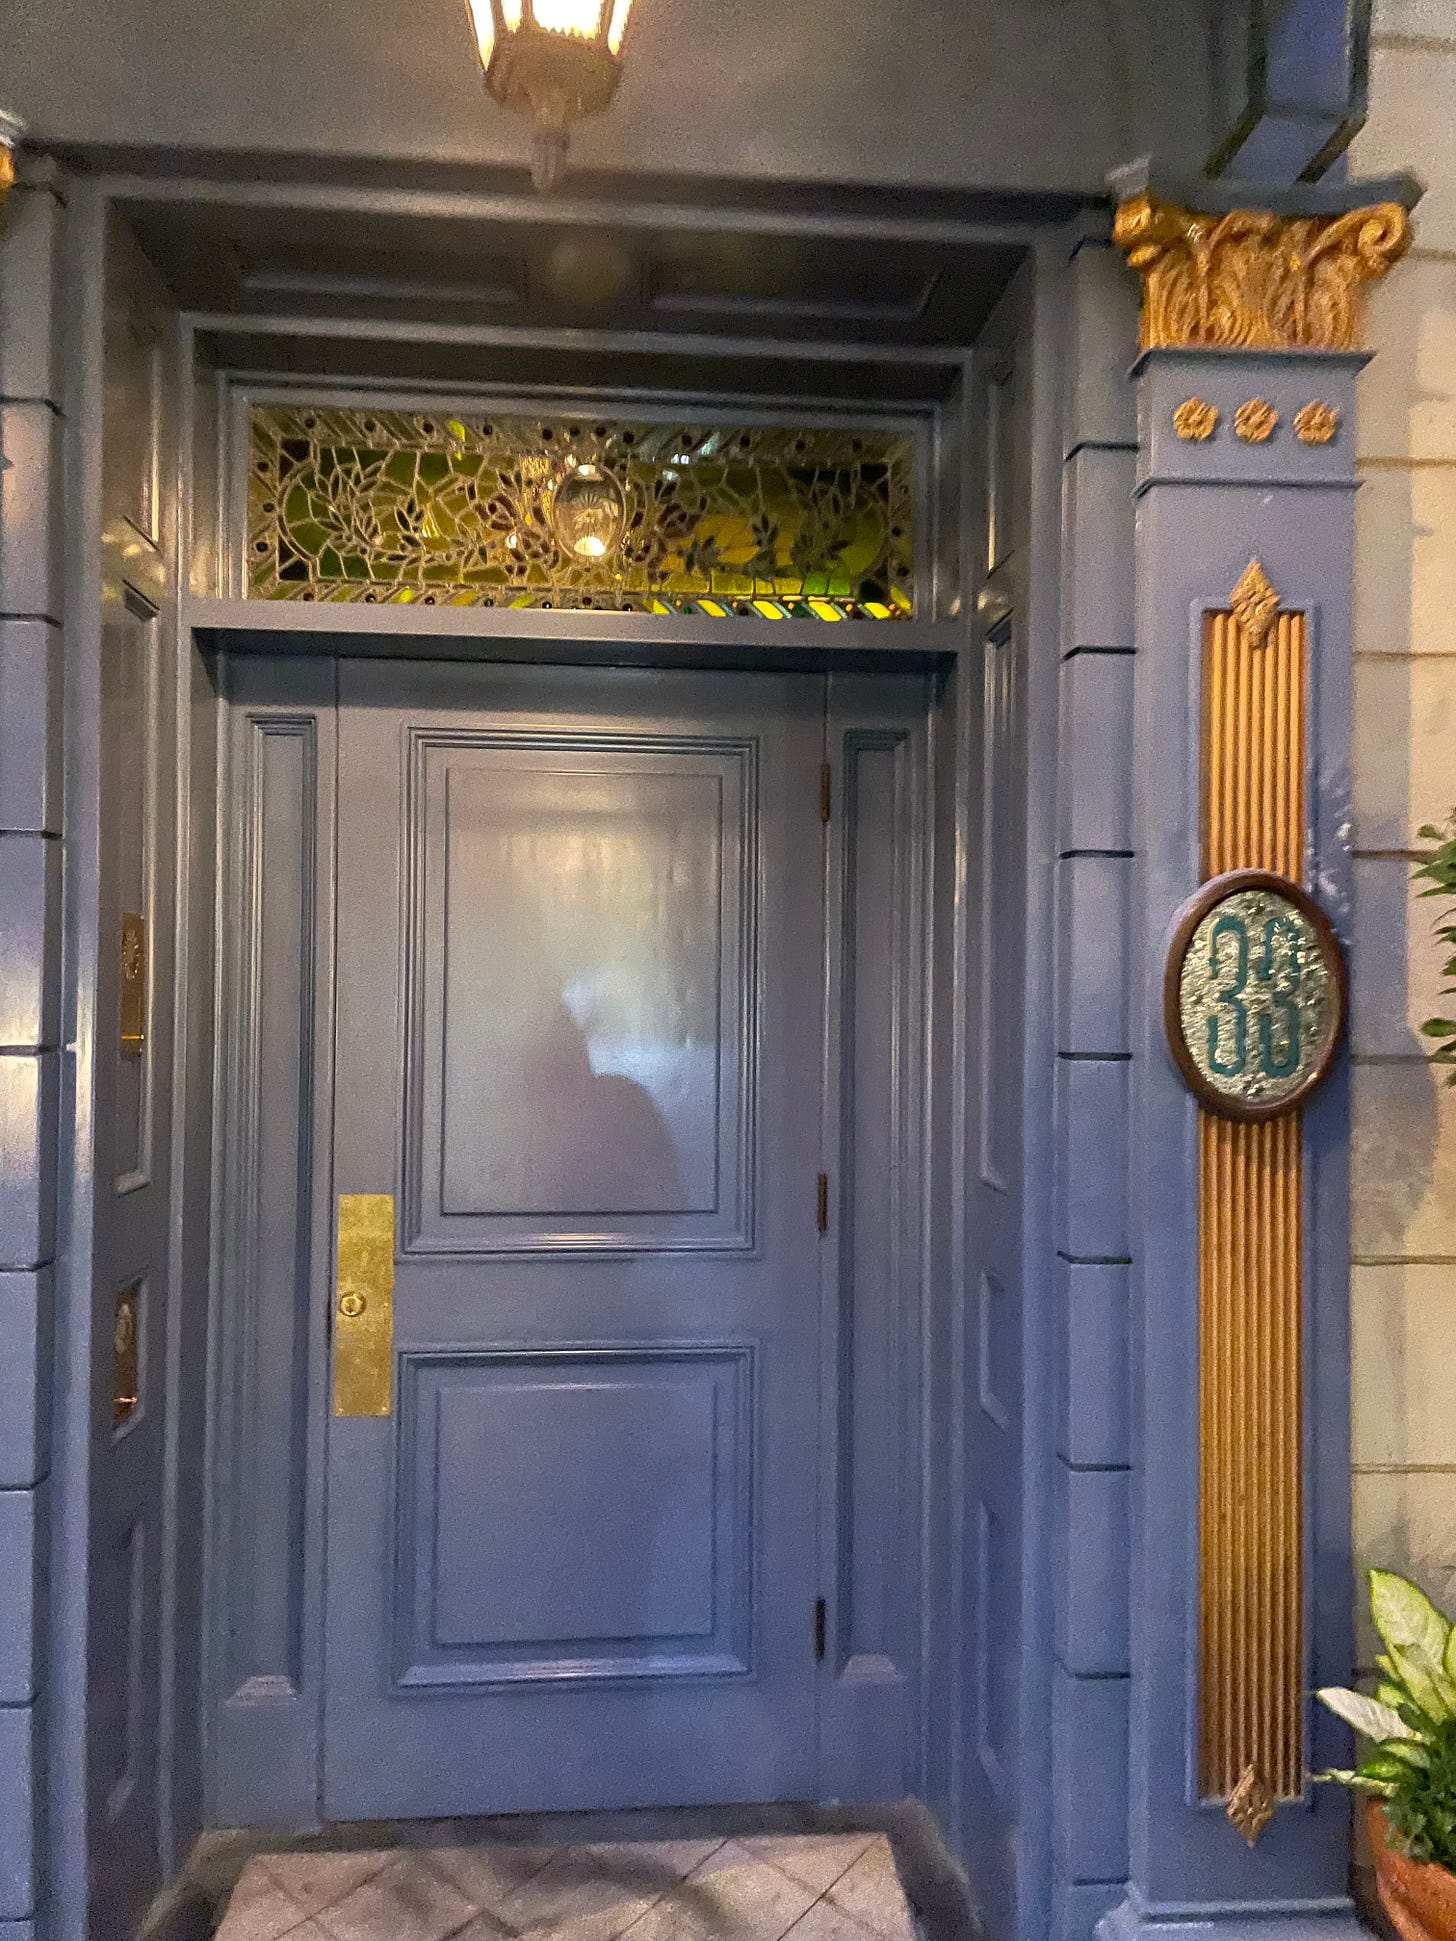 Old door to Club 33 at Disneyland Resort. Secret Disney Club for VIPs at Disneyland.